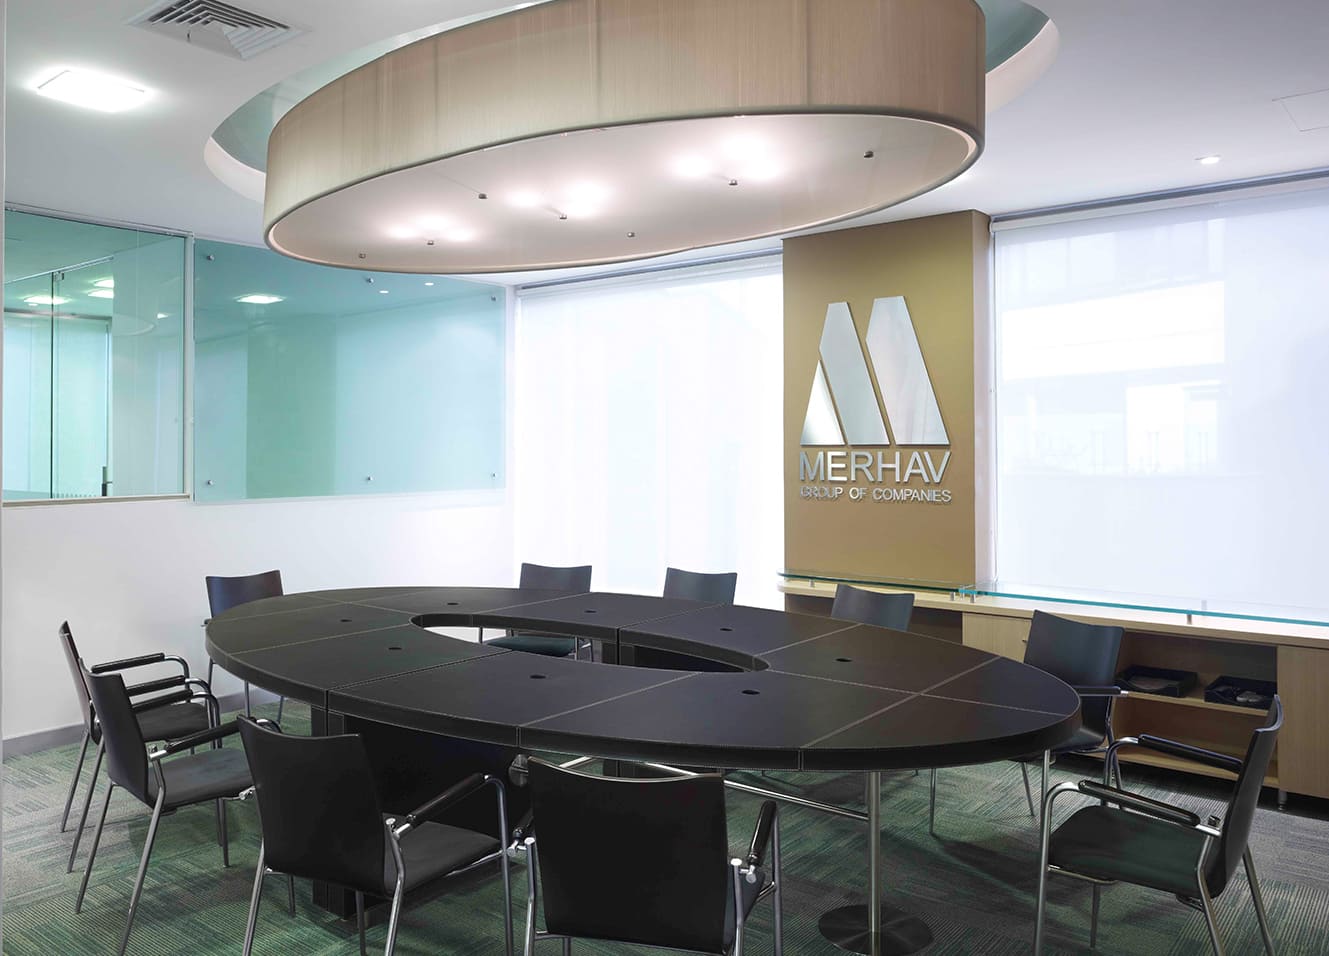 merhav group of companies 2 - corporativo - david restrepo arquitectos